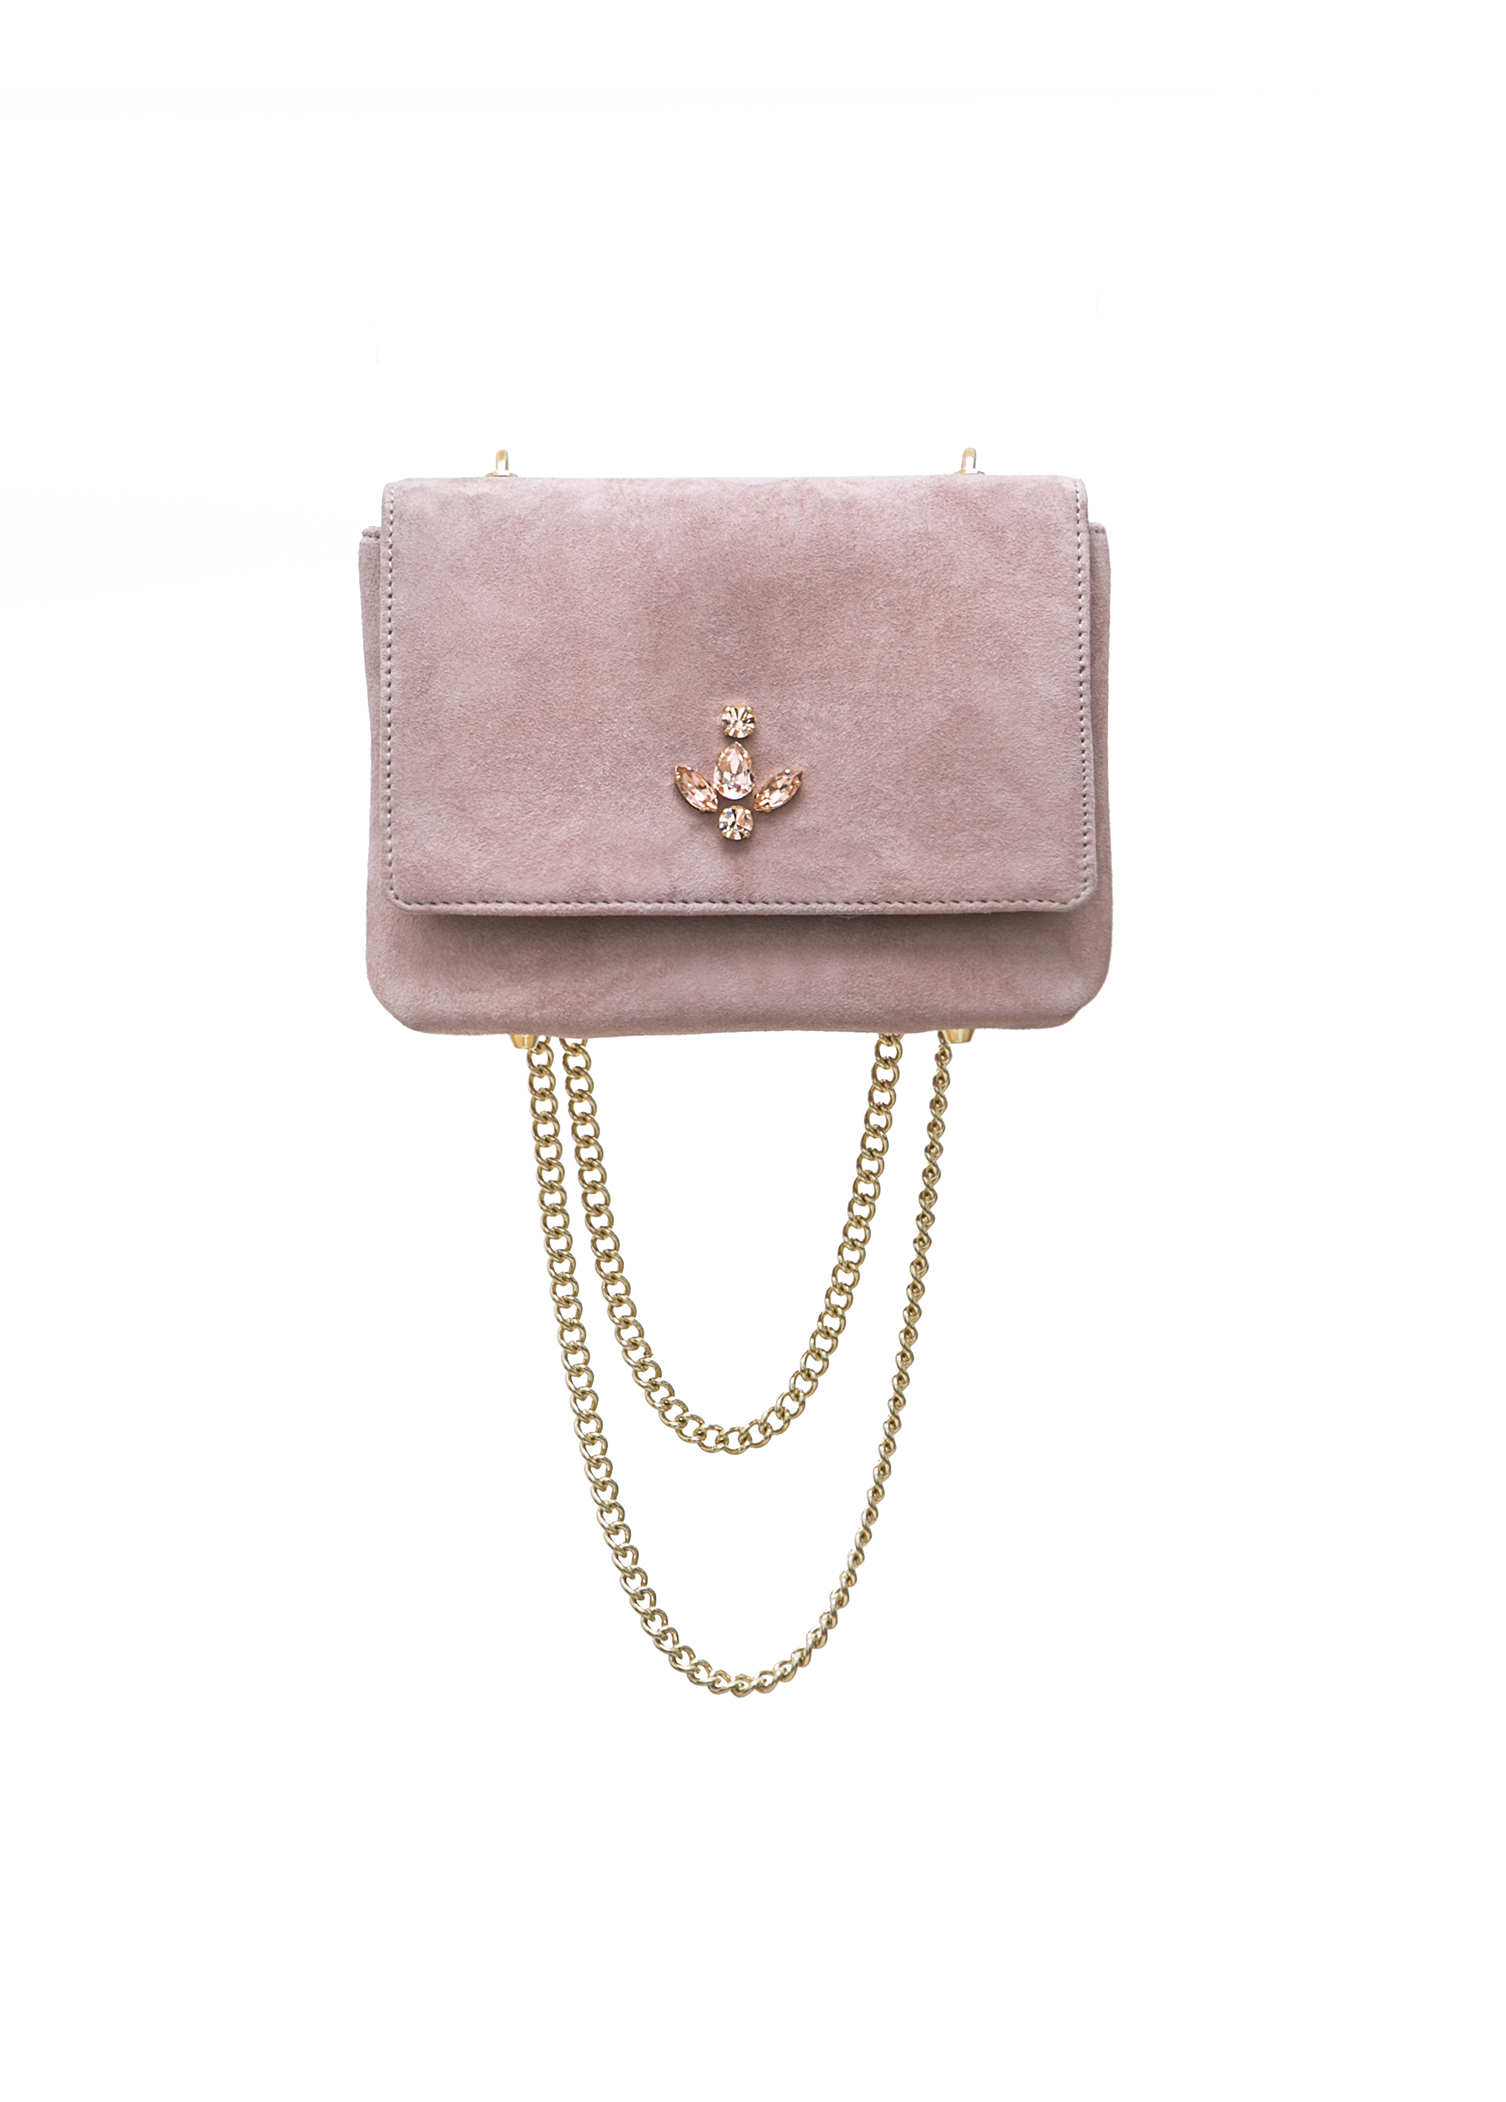 BEIGE PINK SUEDE MINI BAG: 189€ | ANNA KRUZ | Baltic leather bag designer